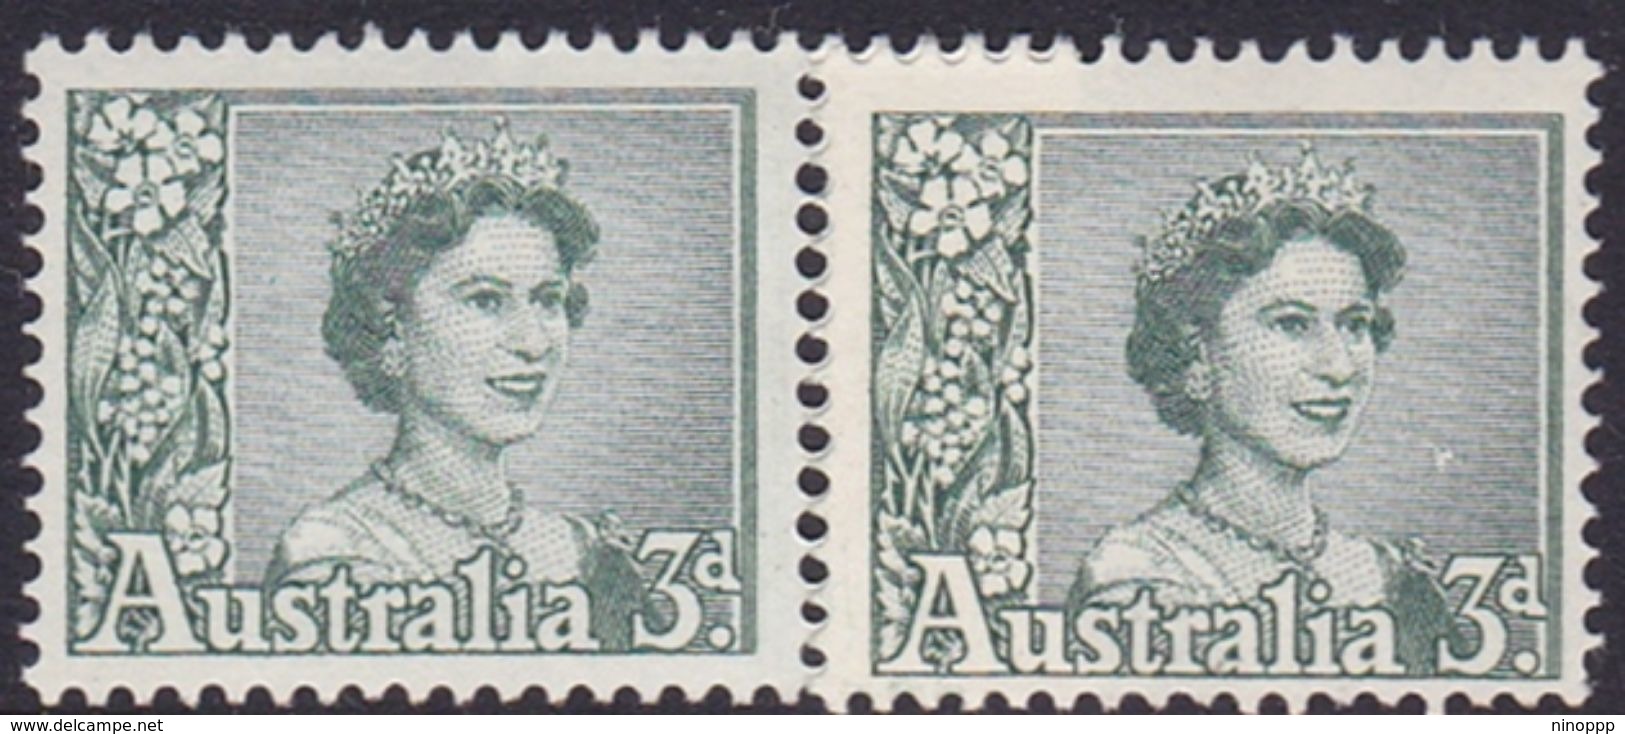 Australia ASC 343 1959 Queen Elizabeth II 3d Blue-green, Joint Coil Pair, Mint Never Hinged - Proeven & Herdruk